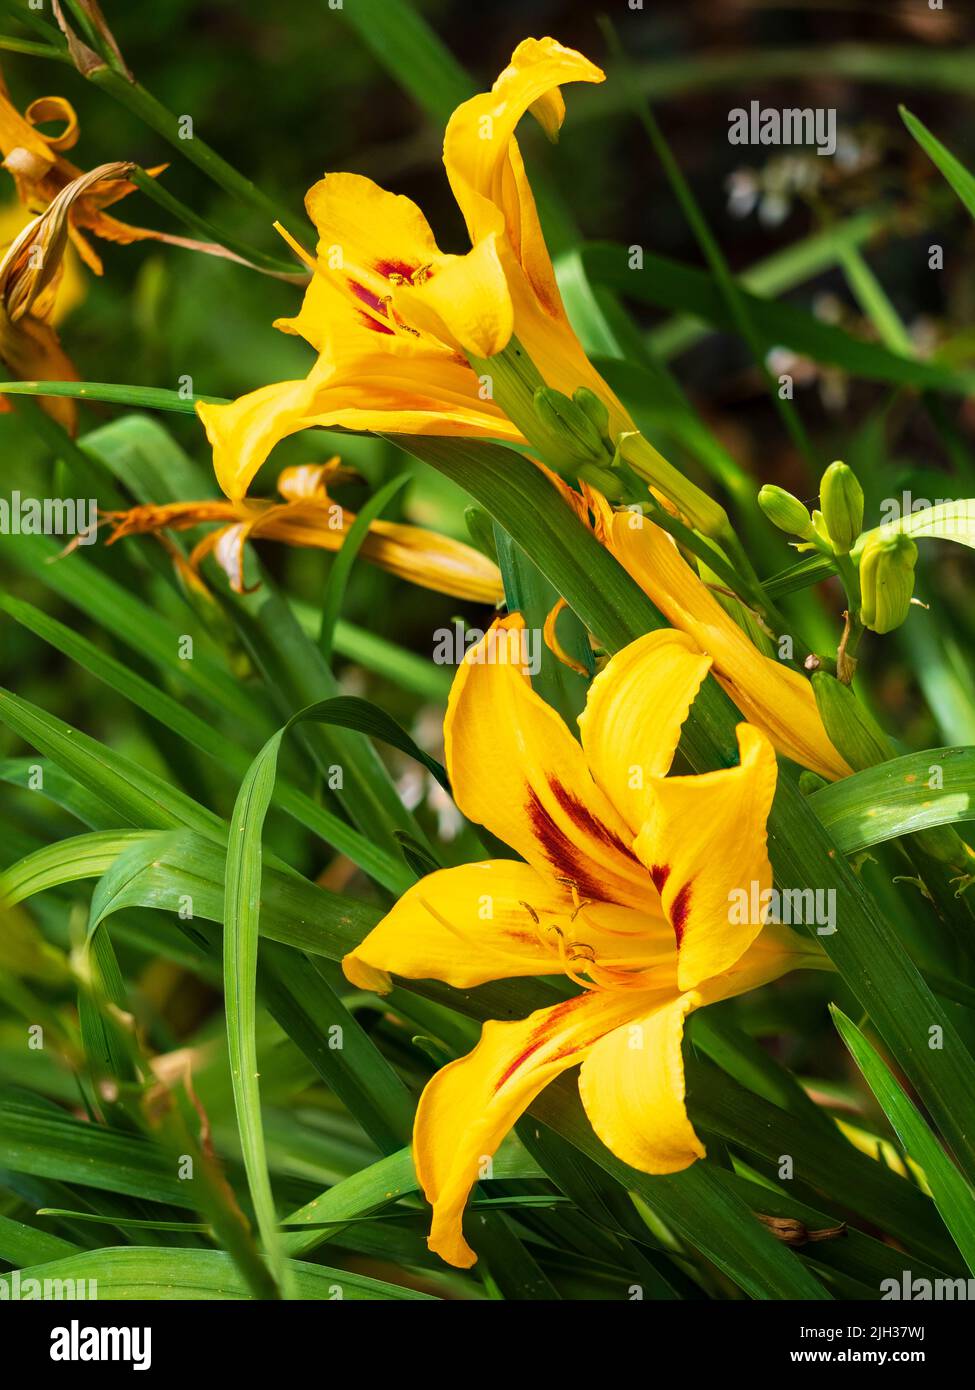 Red throated yellow flower of the hardy perennial summer flowering daylily, Hemerocallis 'Bonanza' Stock Photo